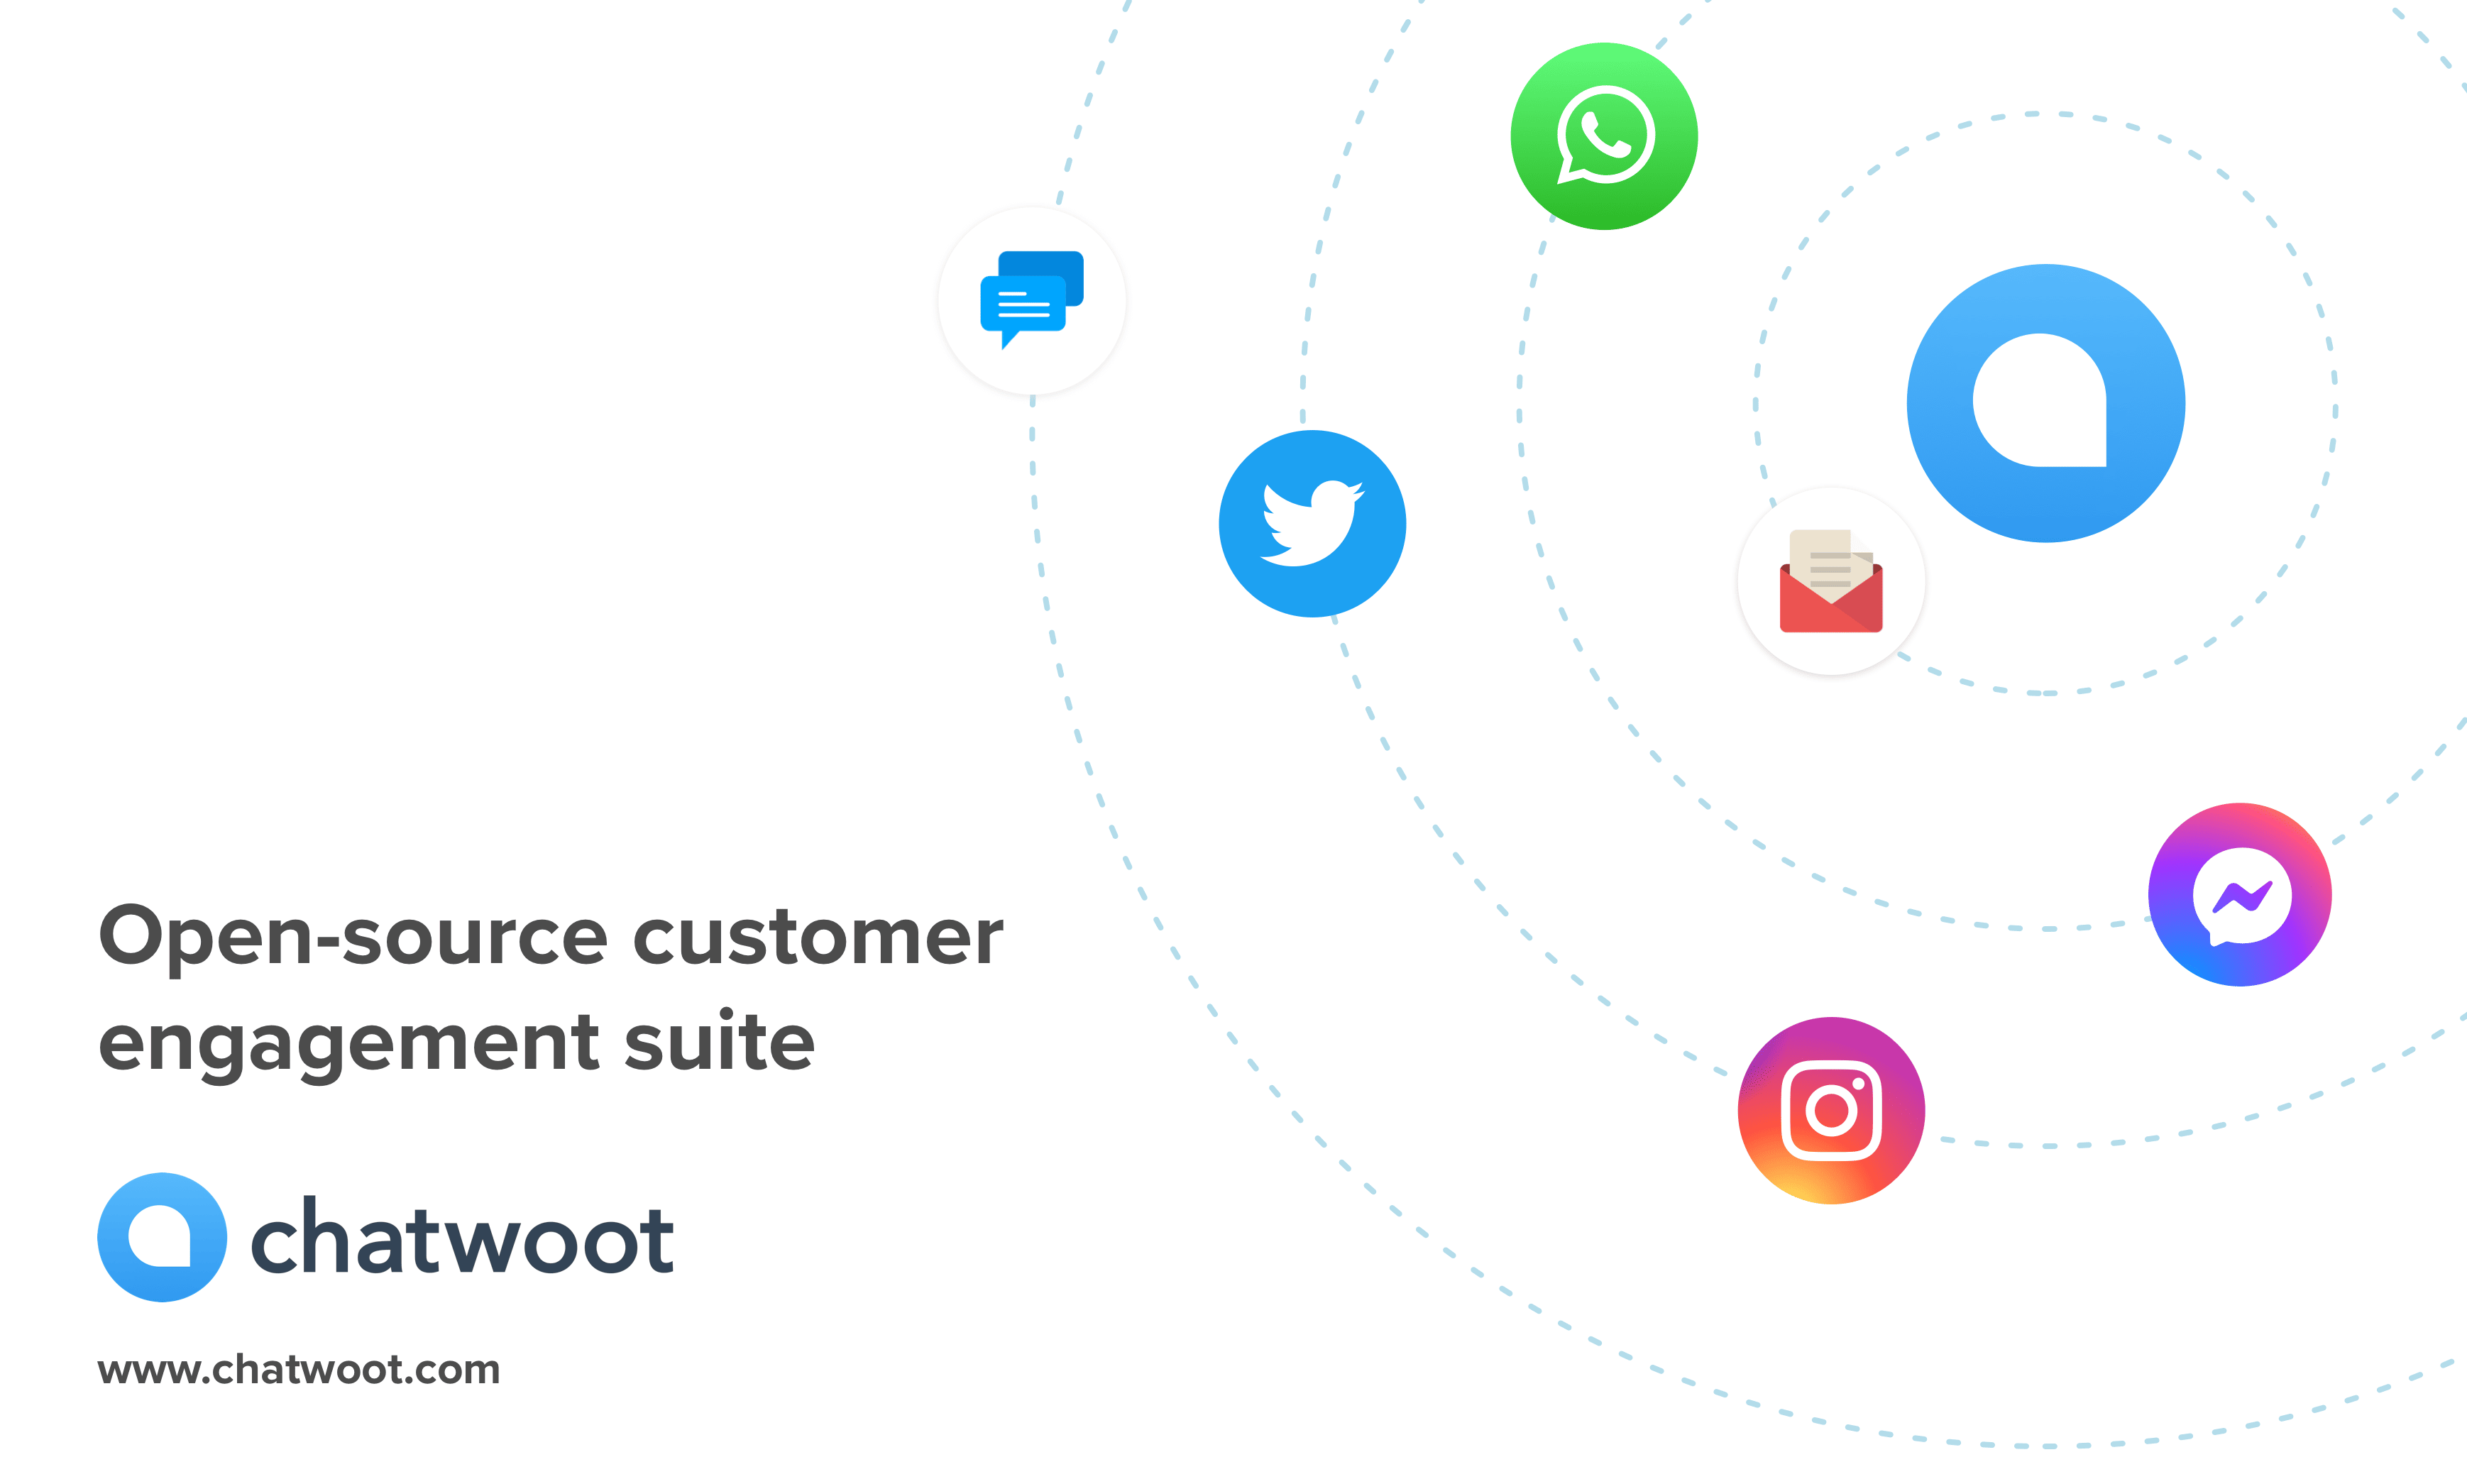 Chatwoot: Open-source, self-hosted customer engagement platform, opensource alternative to Intercom, Zendesk